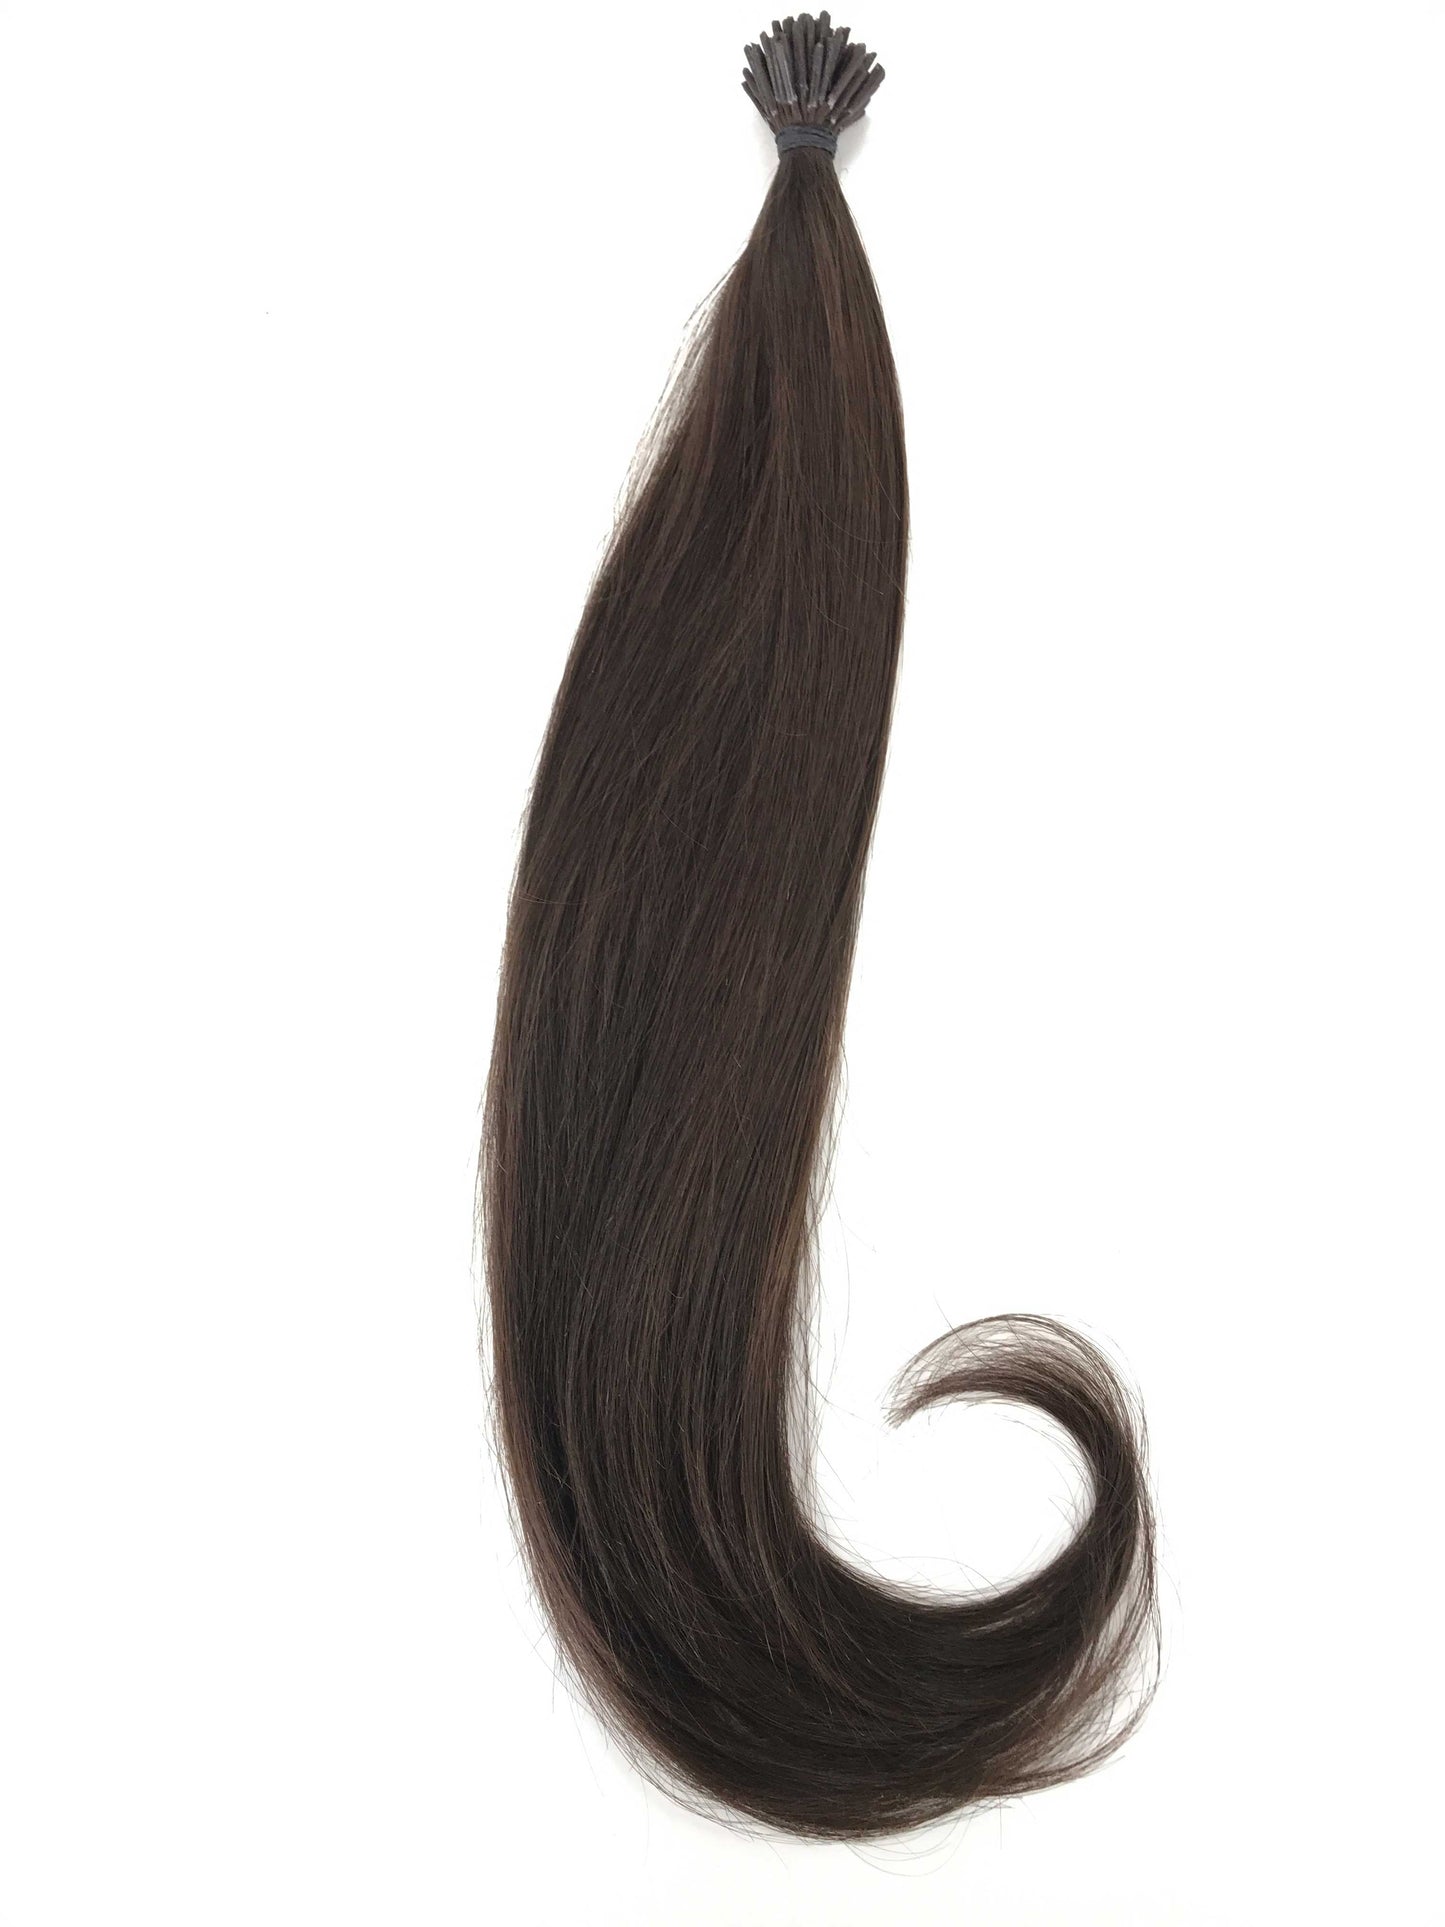 Russian Virgin Human Hair Extensions, 0.7g i-Tip Micro Rings-Virgin Hair & Beauty, The Best Hair Extensions, Real Virgin Human Hair.